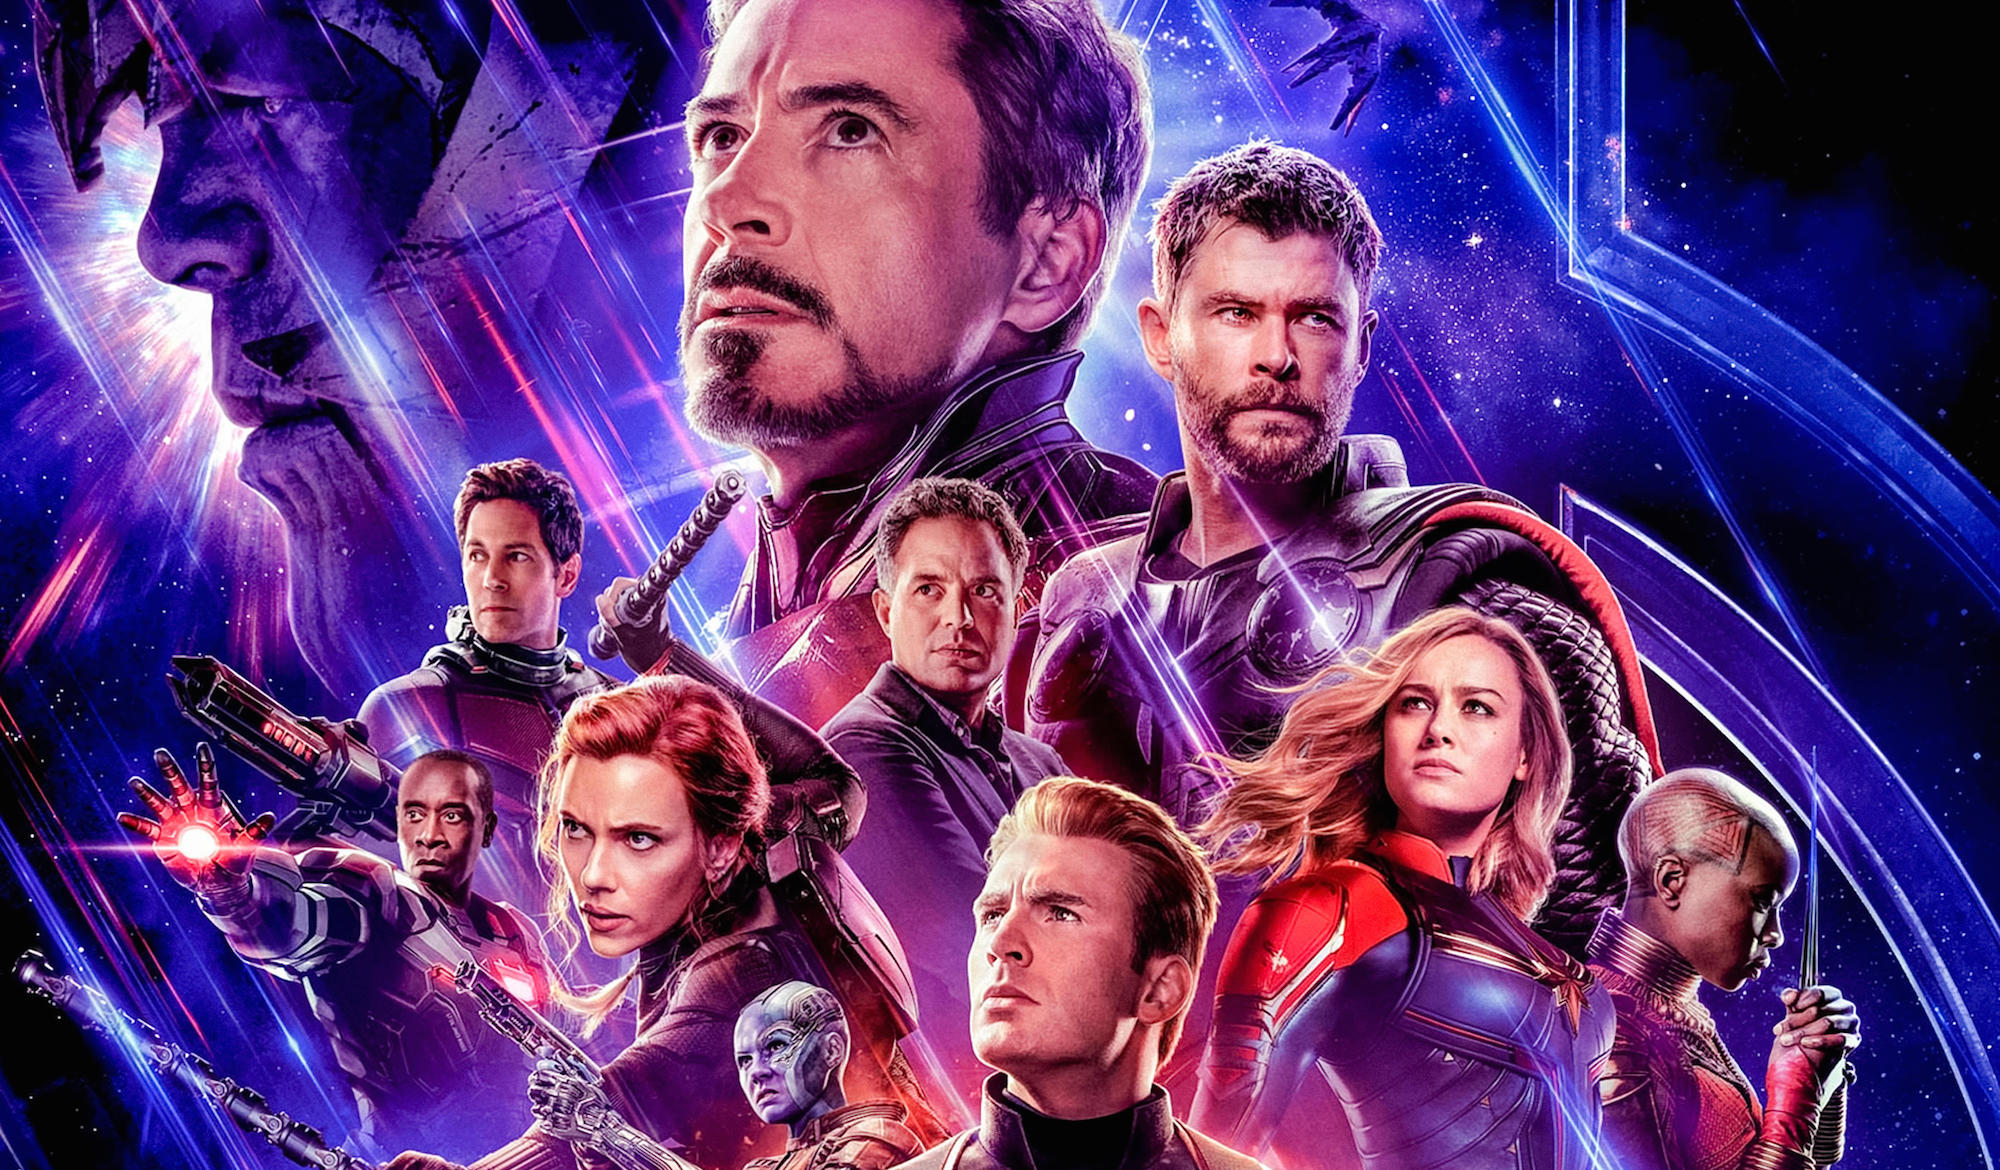 Marvel considering bringing back original ‘Avengers’ in wake of box office struggles